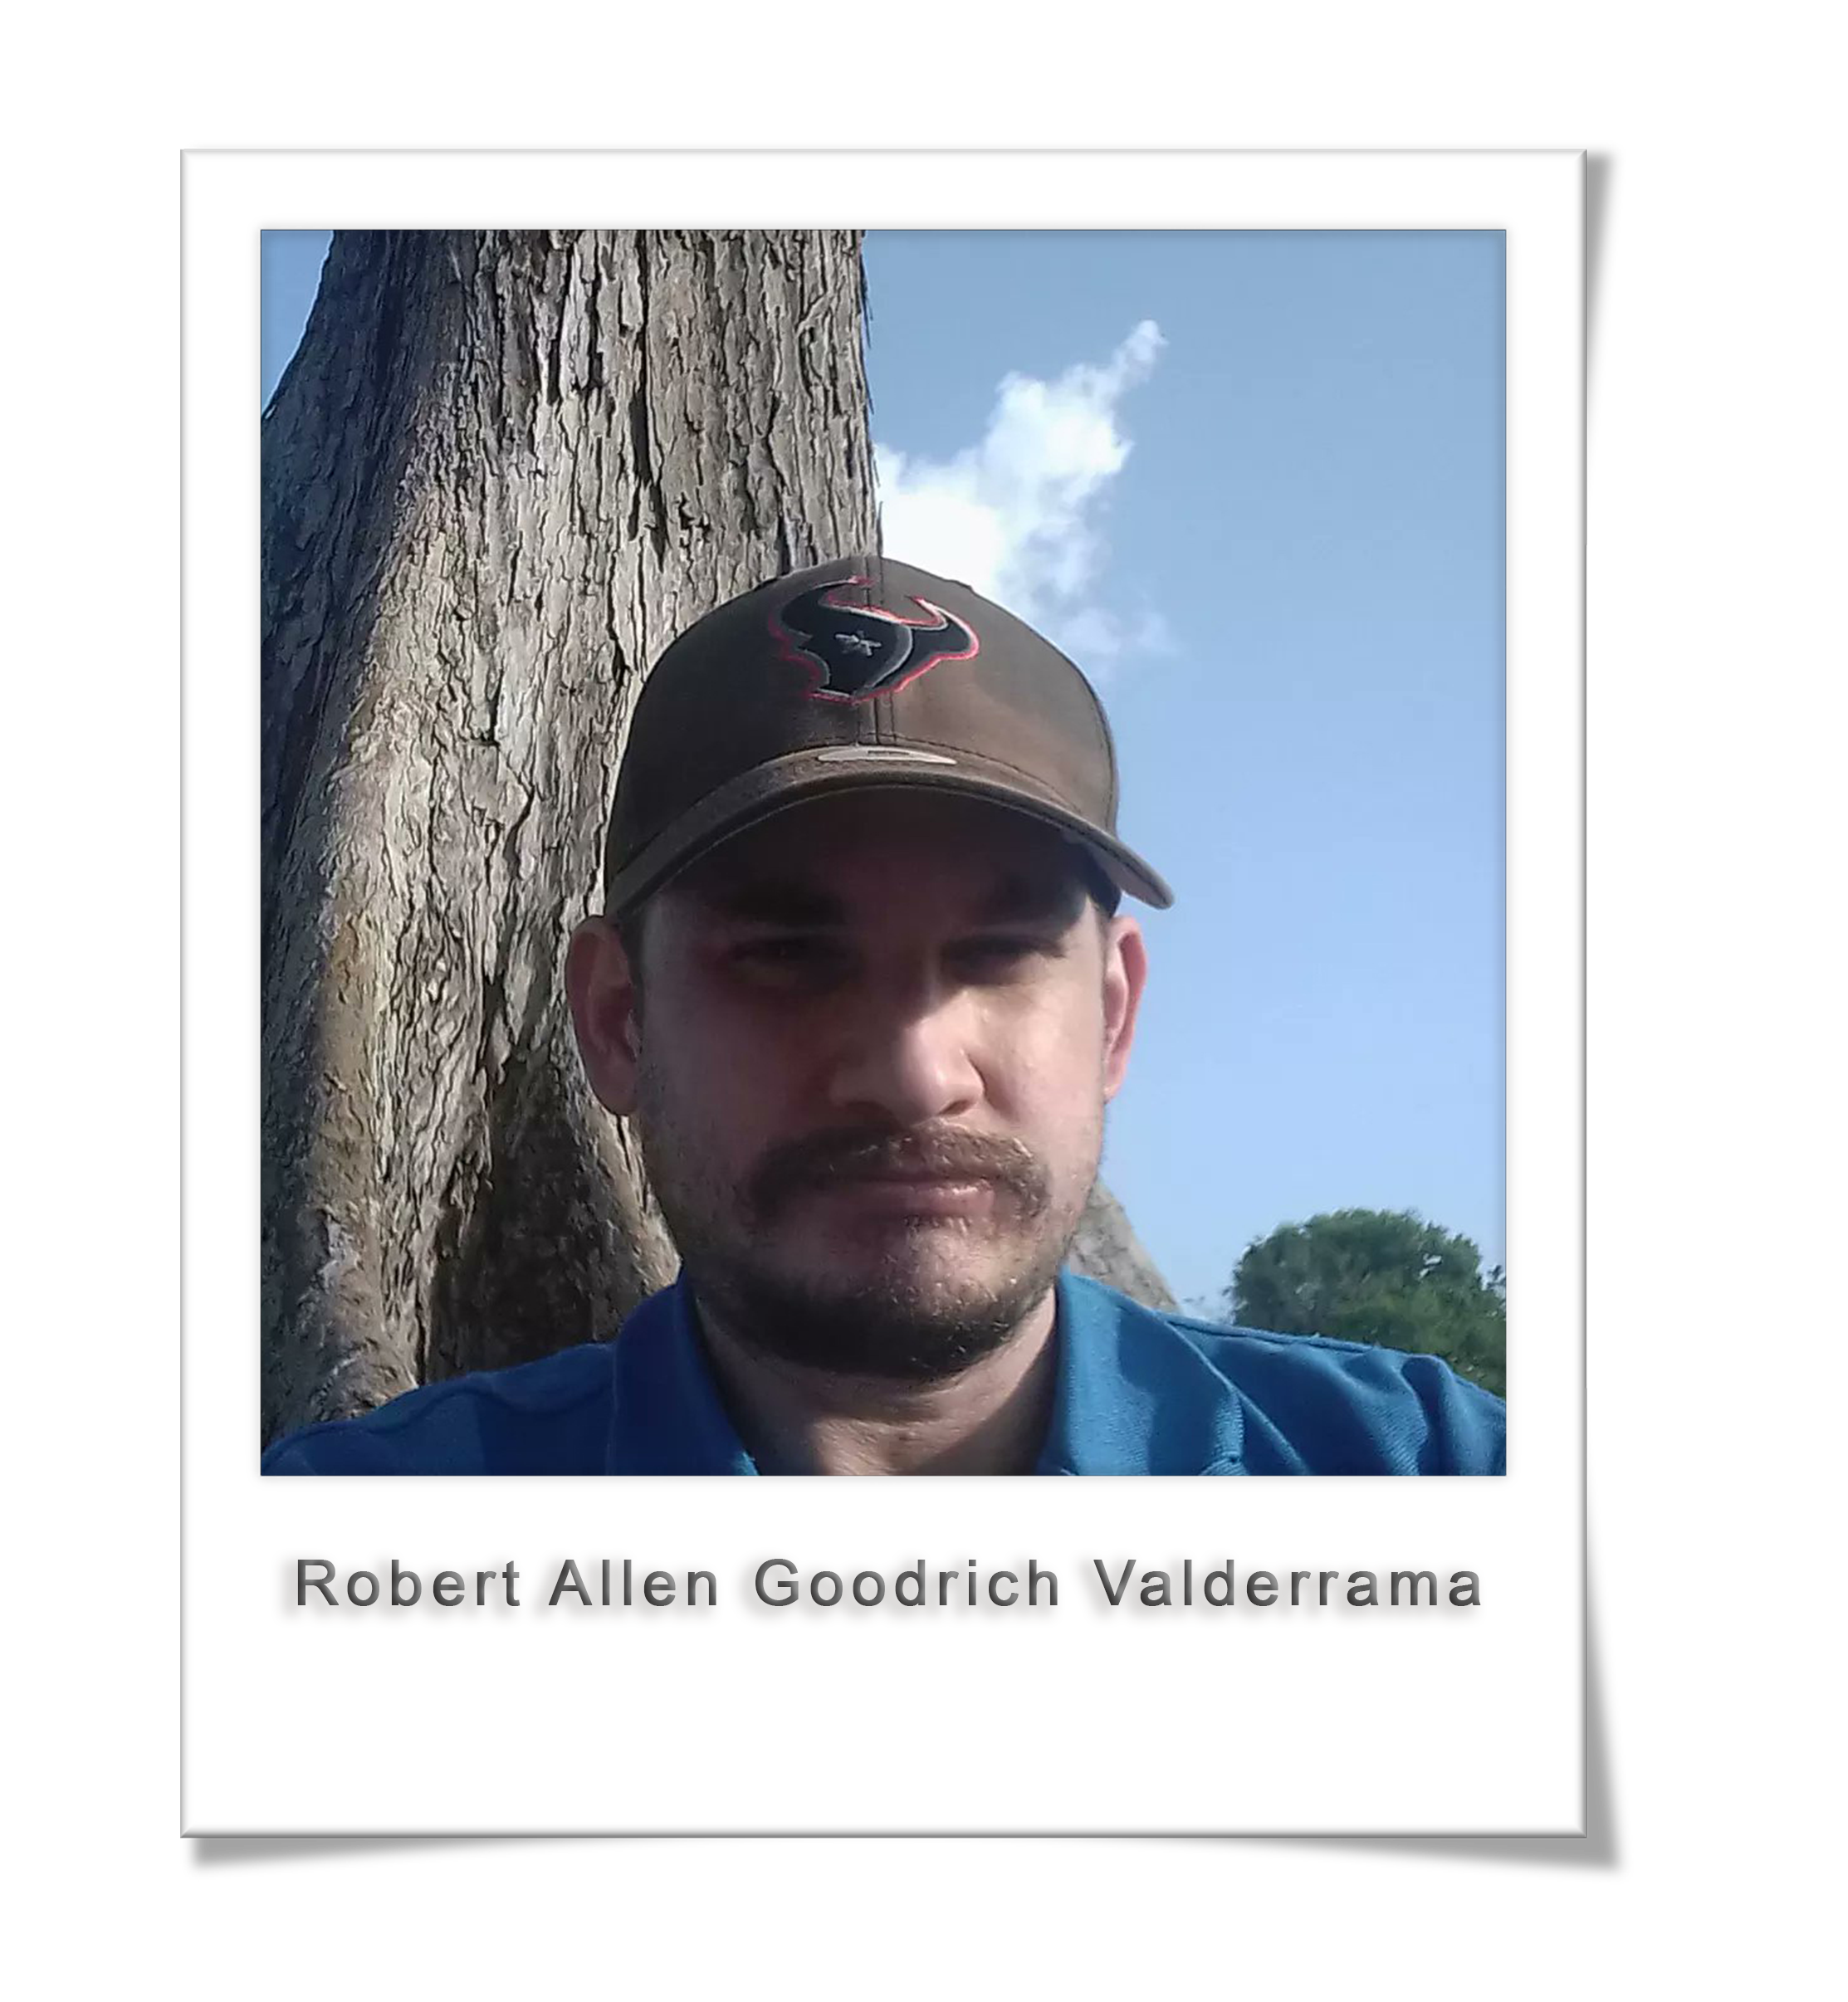 Robert Allen Goodrich Valderrama